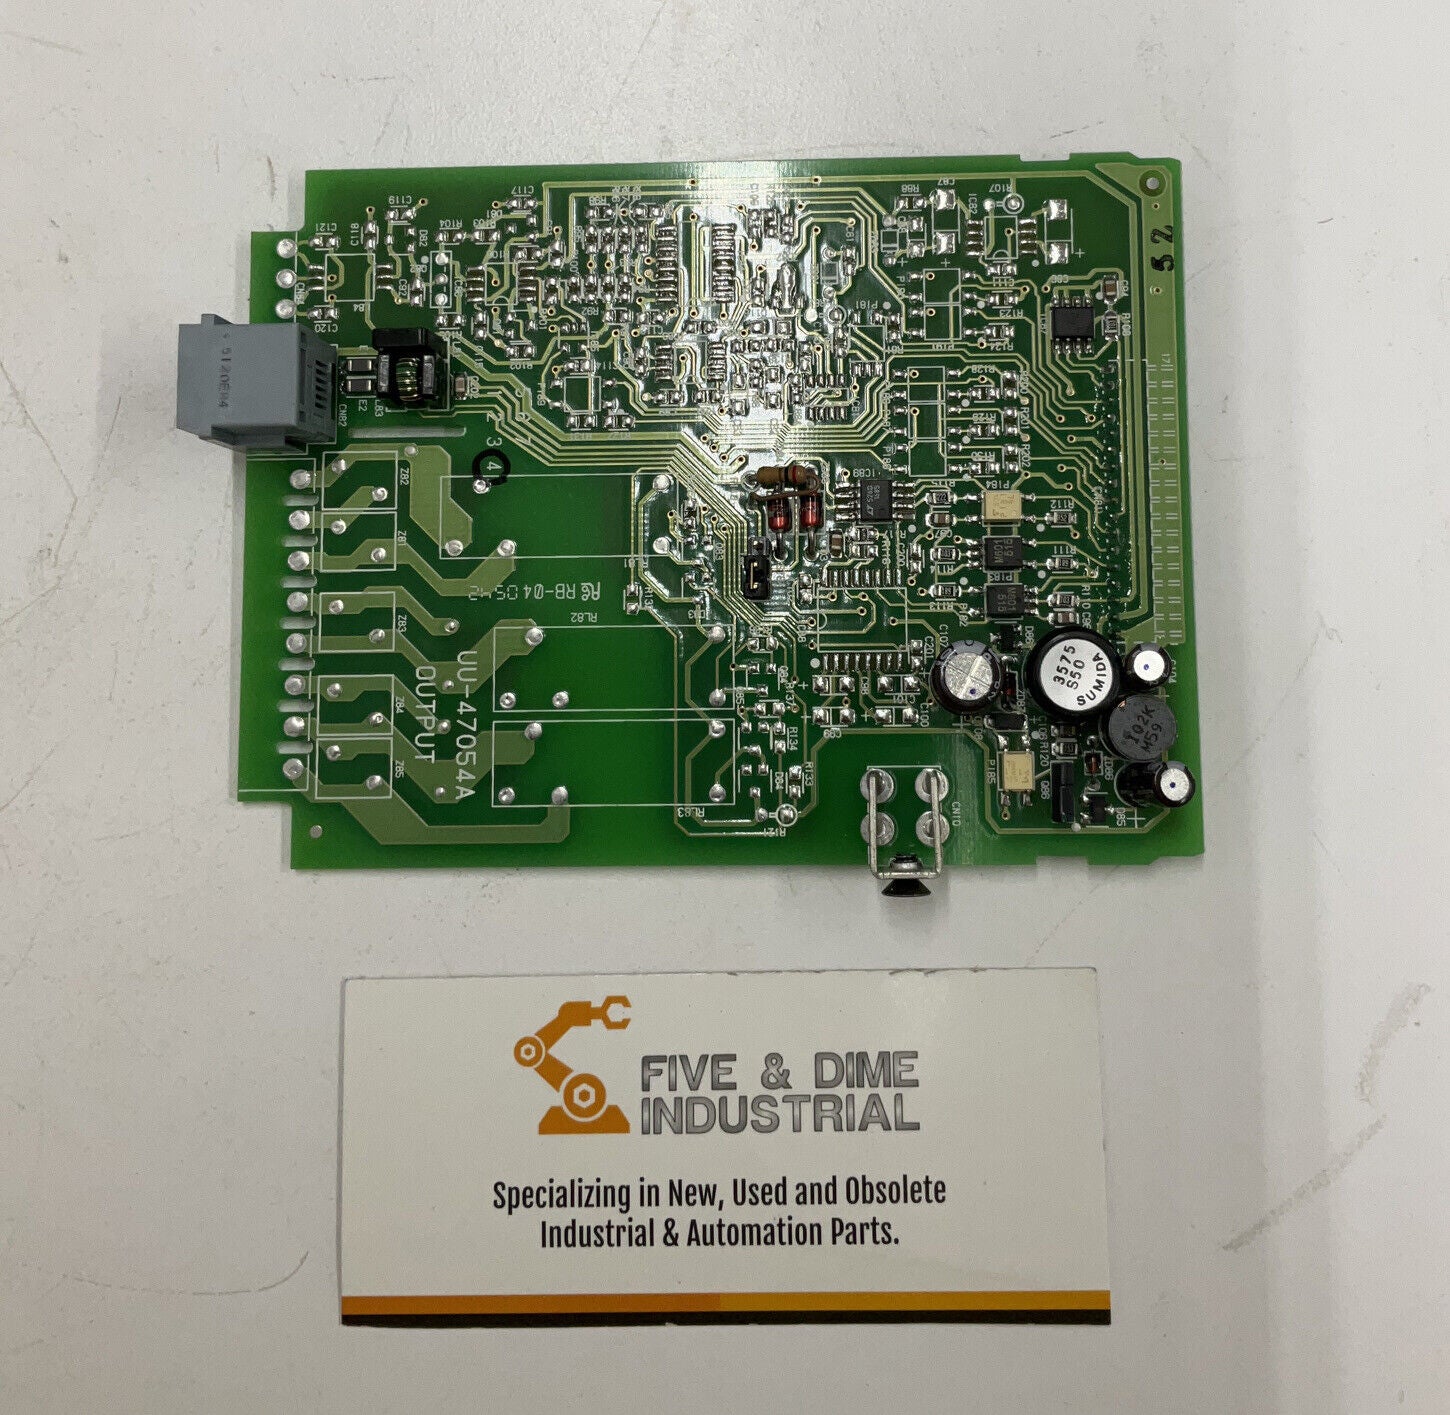 Fuji Electric YFD5004 / W-47054A Digital Meter Output PCB (CL205)